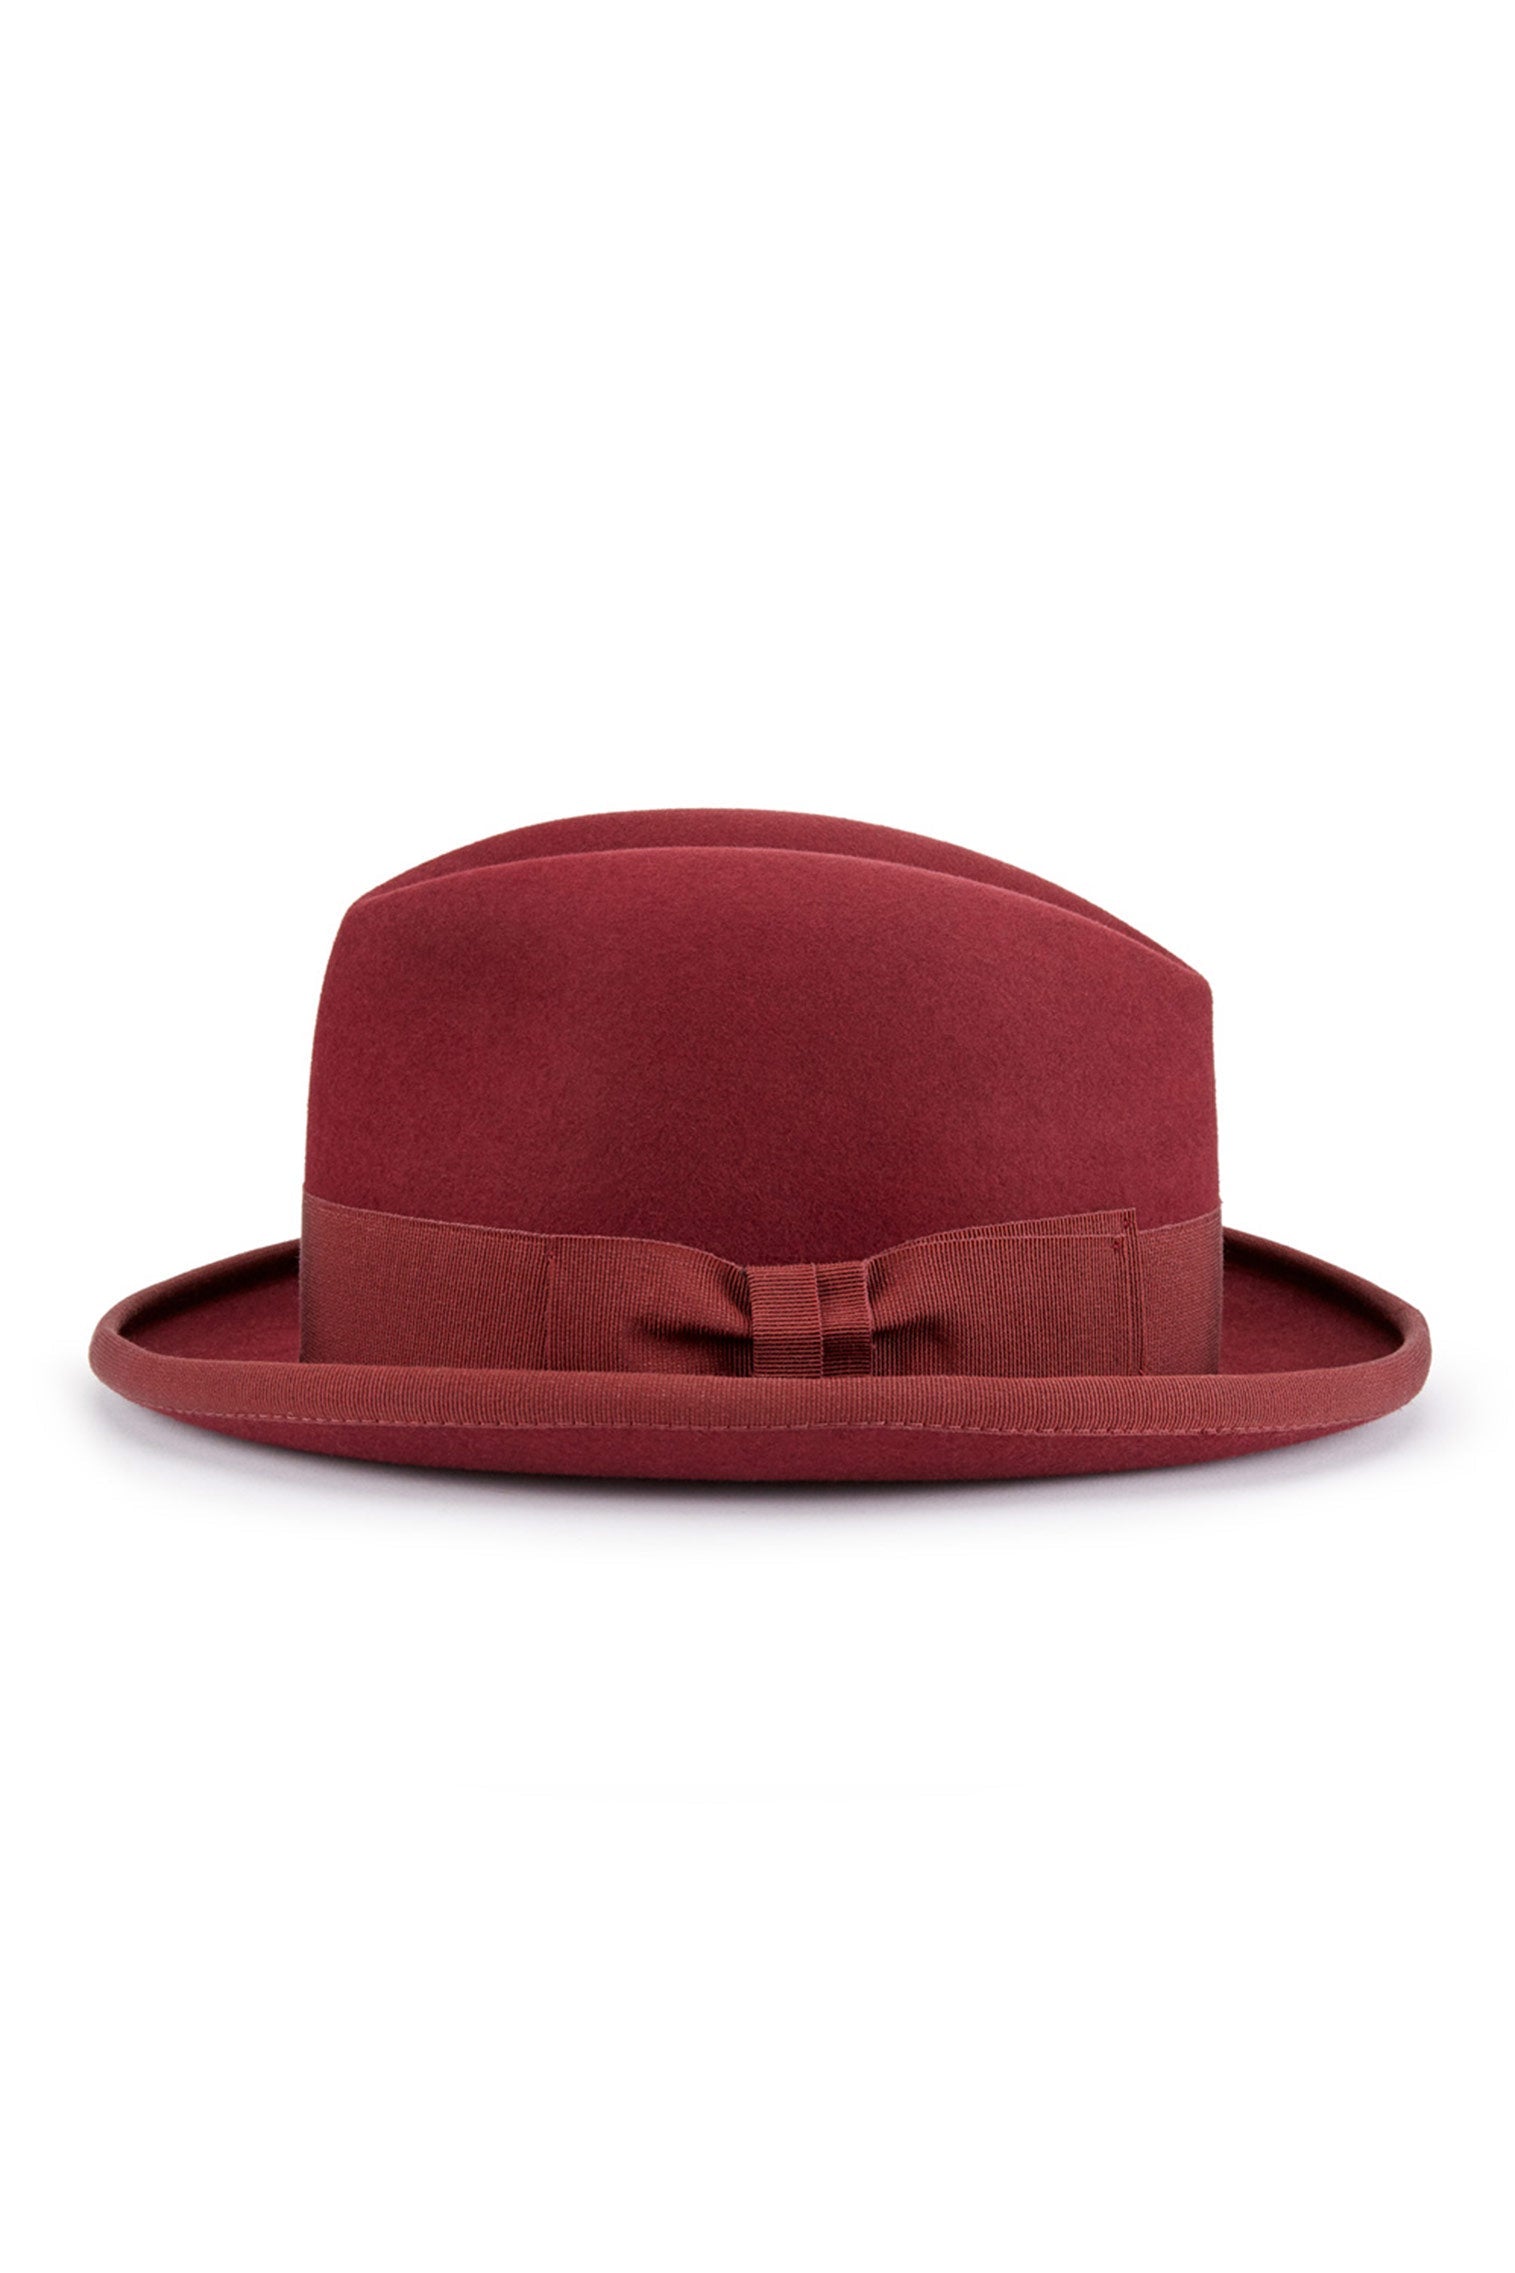 Supreme Burgundy Homburg - Men's Hats - Lock & Co. Hatters London UK